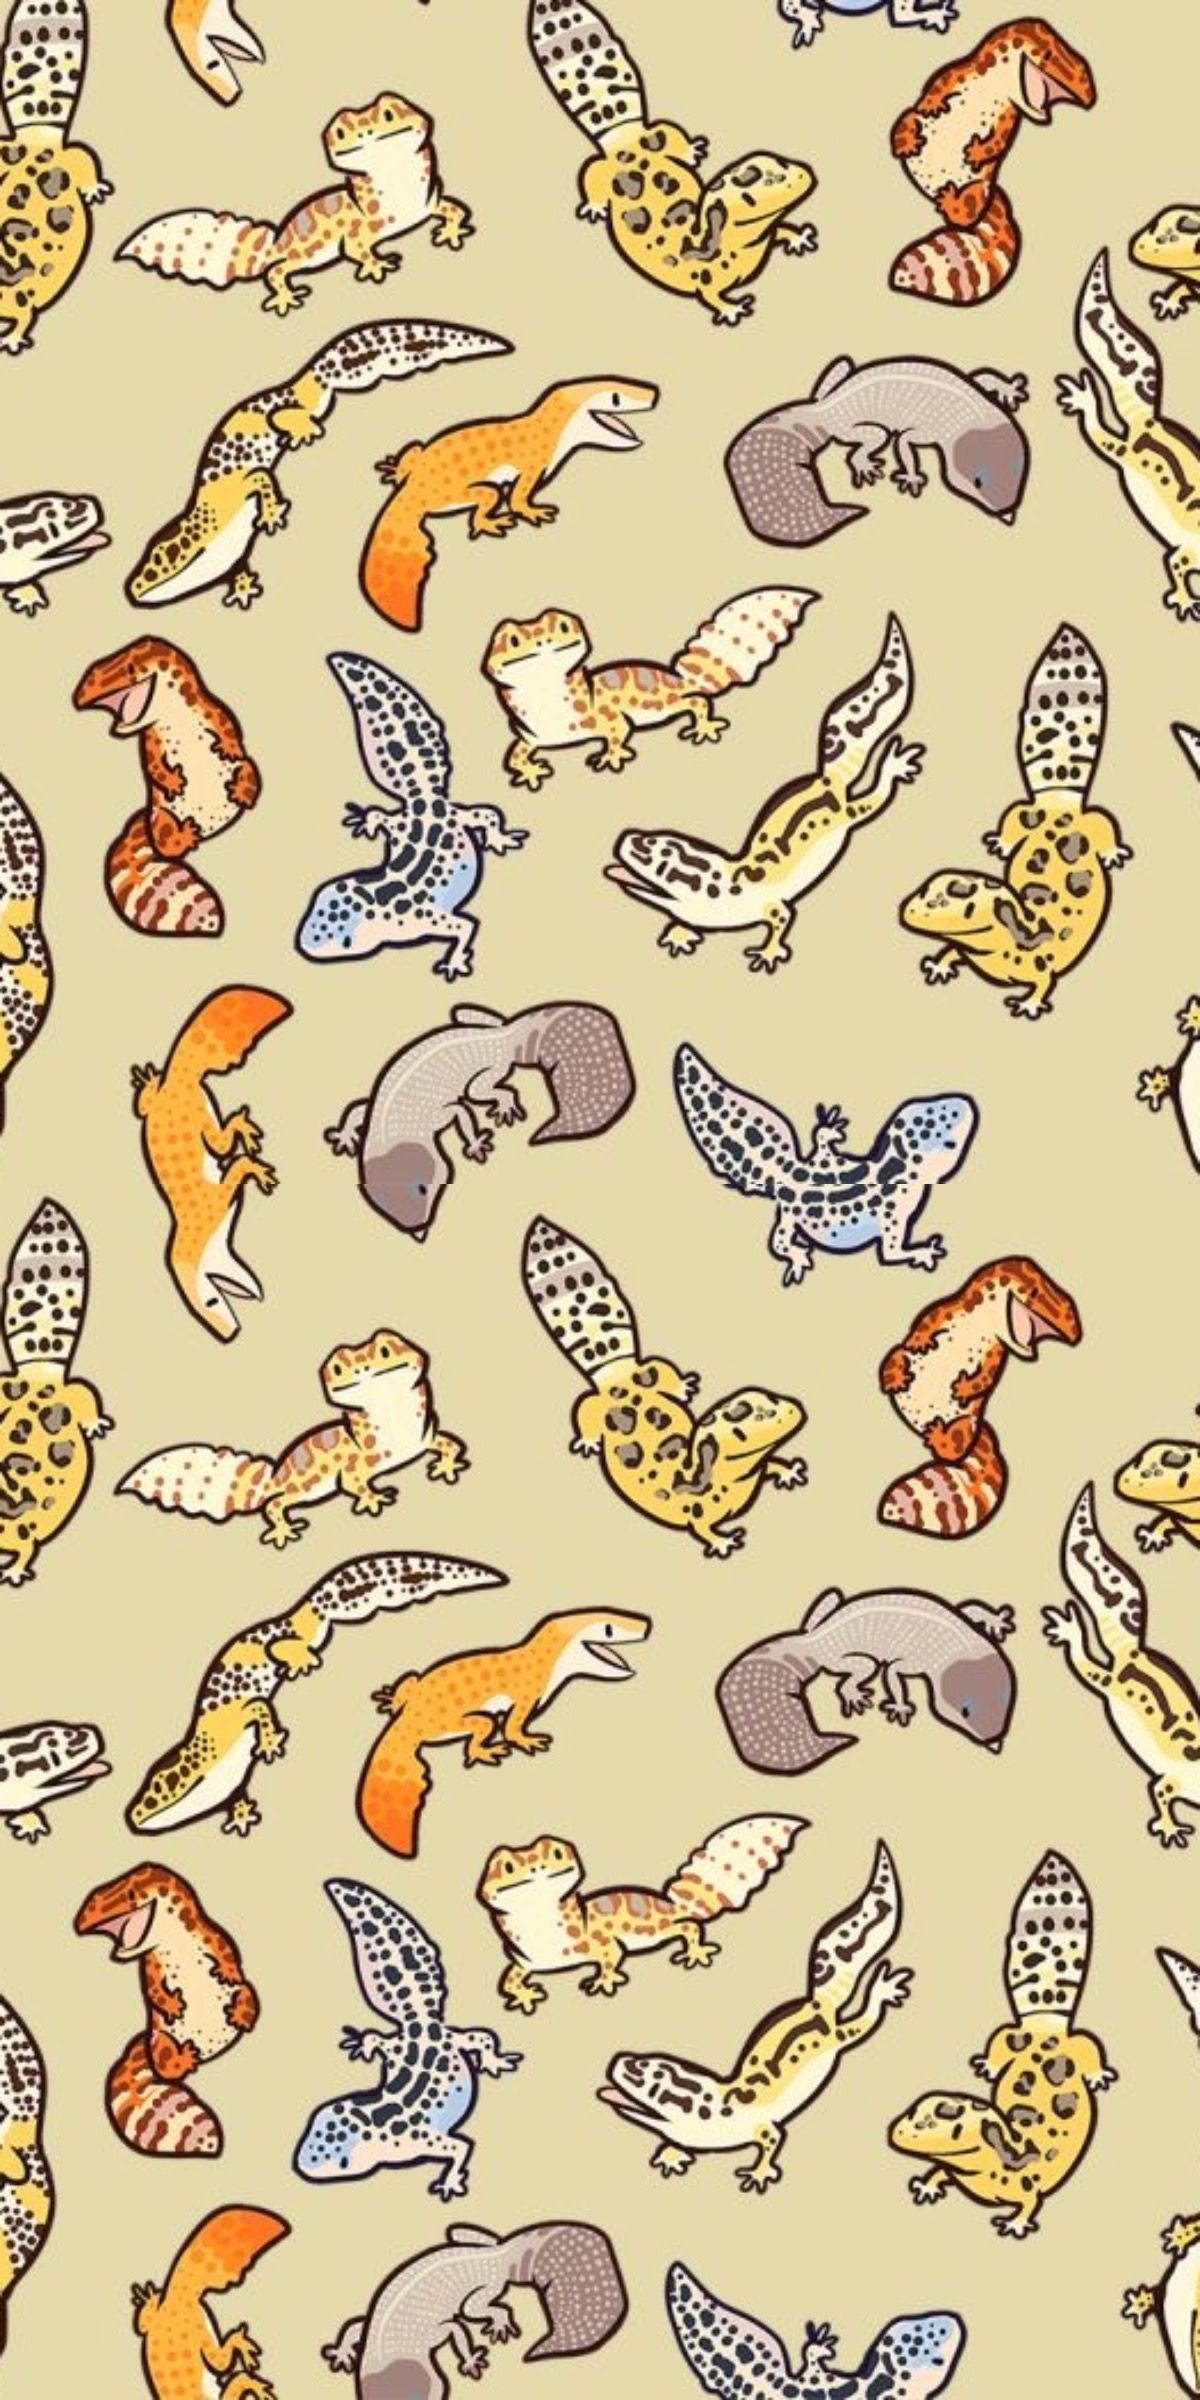 Iguana wallpaper. .Cell Artistic Animals Background / Wallpaper